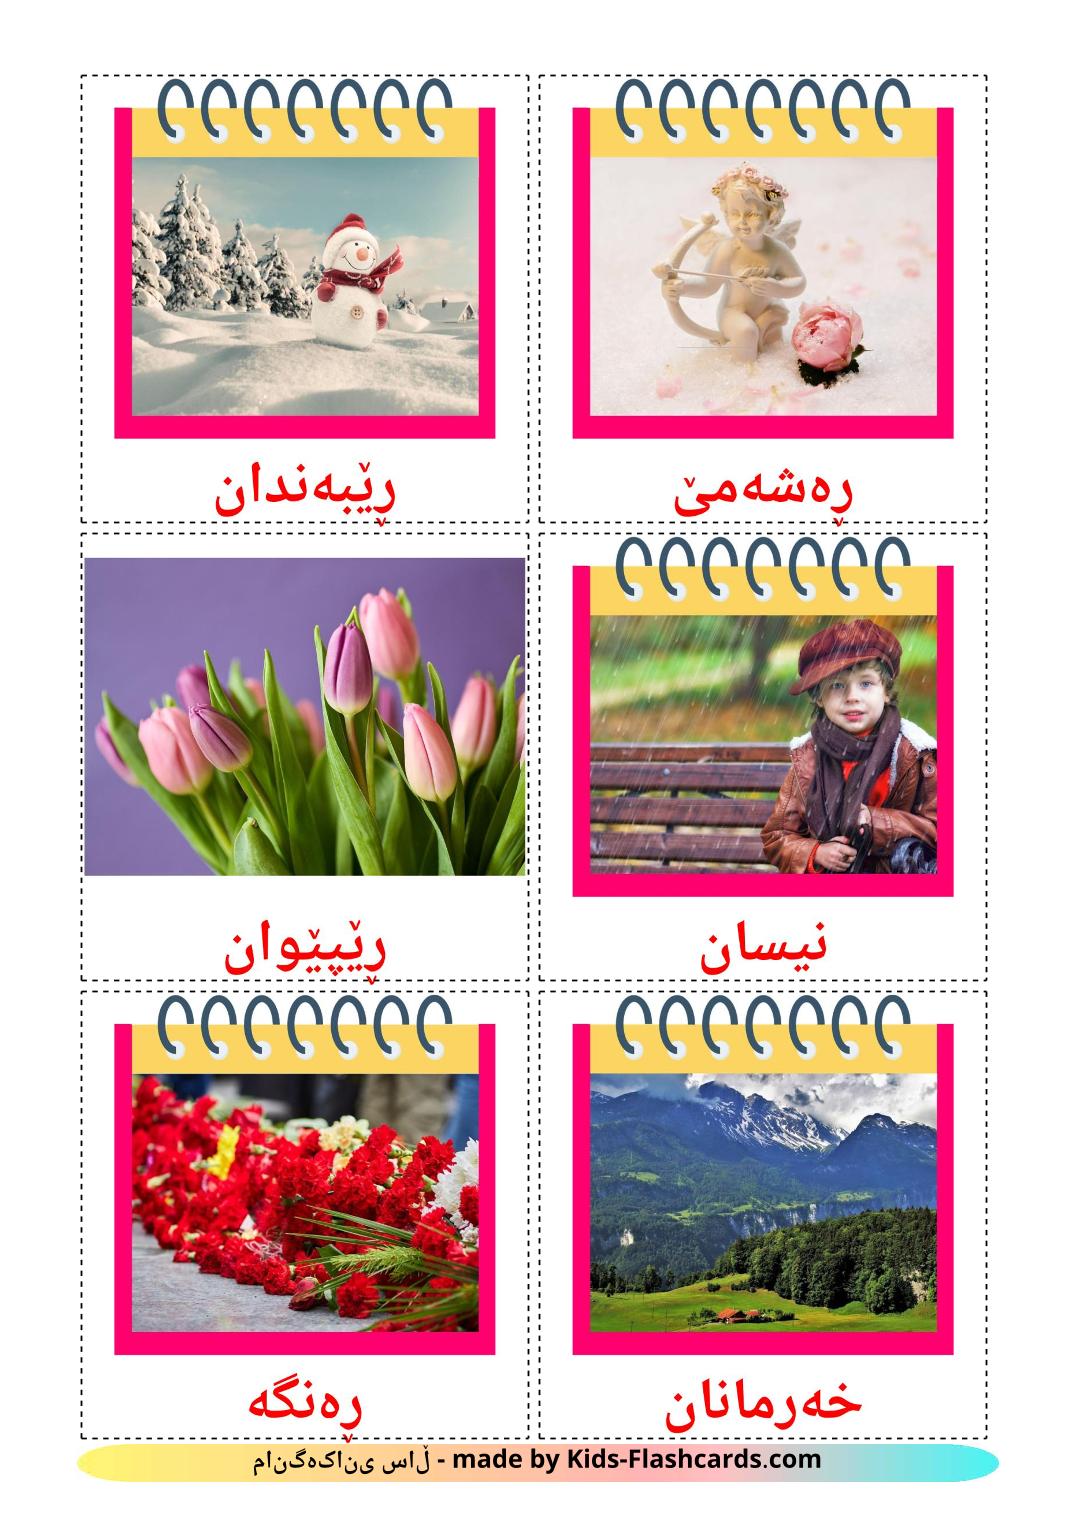 Months of the Year - 12 Free Printable kurdish(sorani) Flashcards 